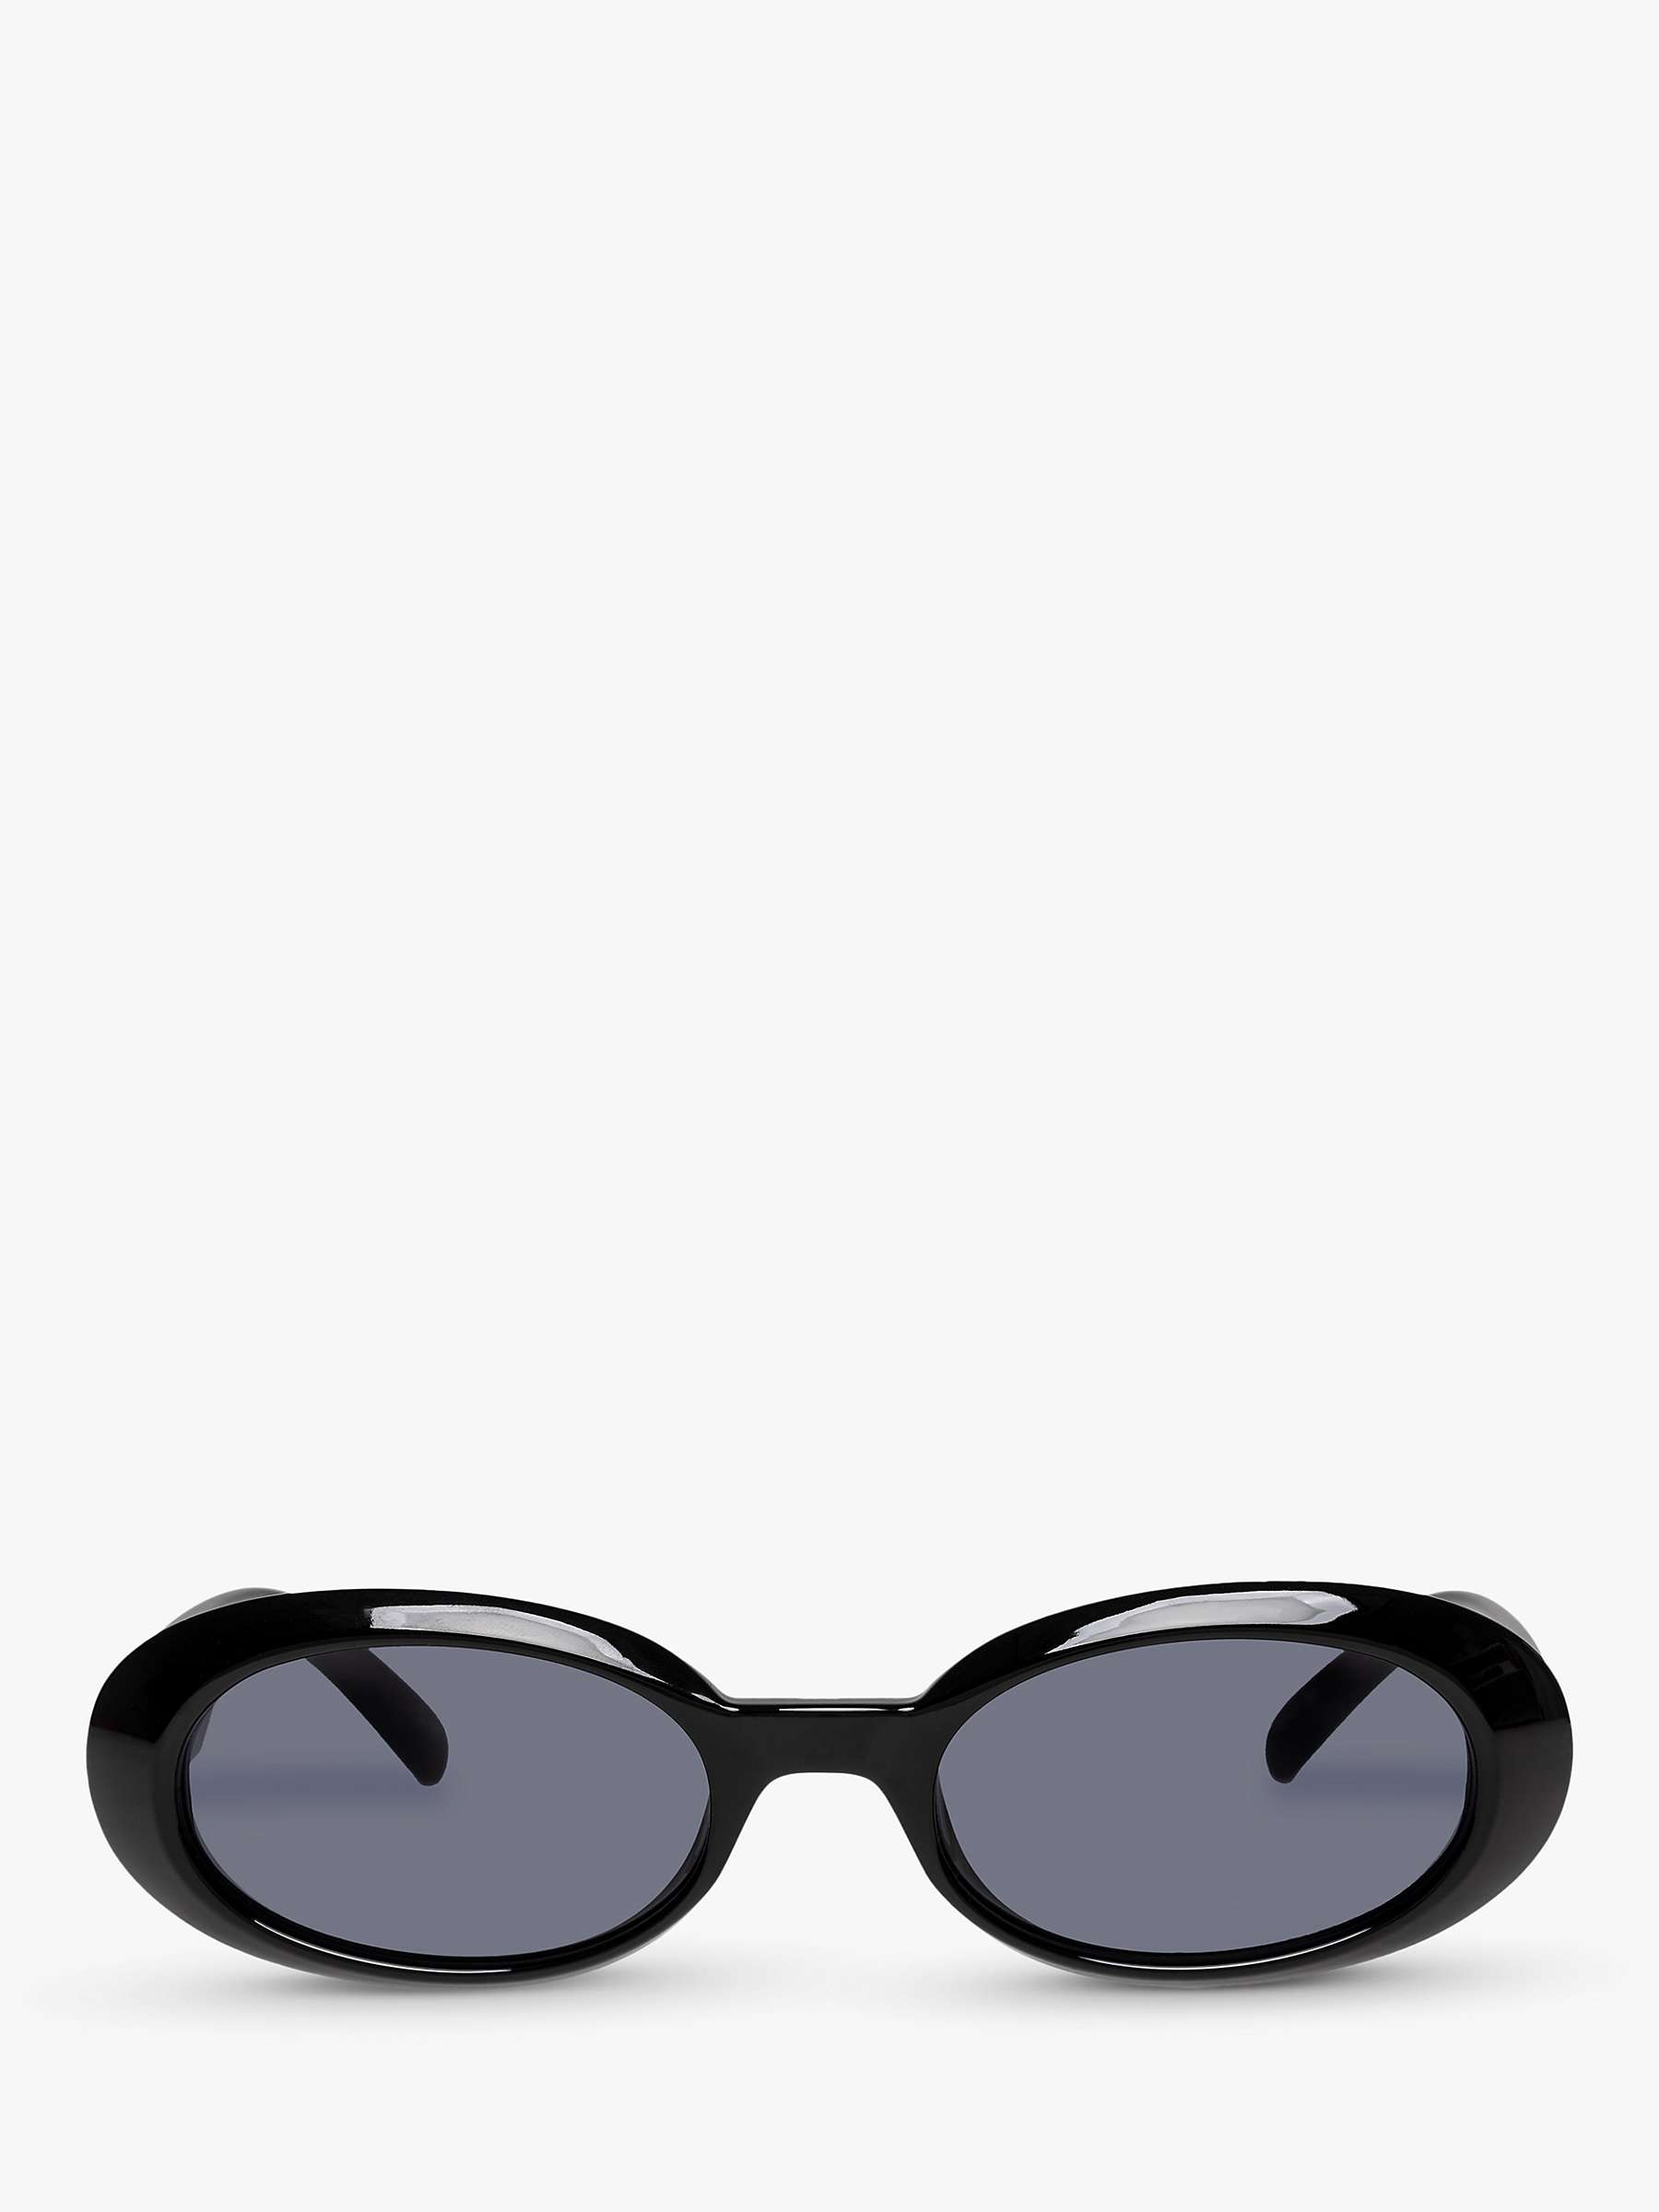 Buy Le Specs L5000187 Women's Work It Oval Sunglasses, Black/Grey Online at johnlewis.com